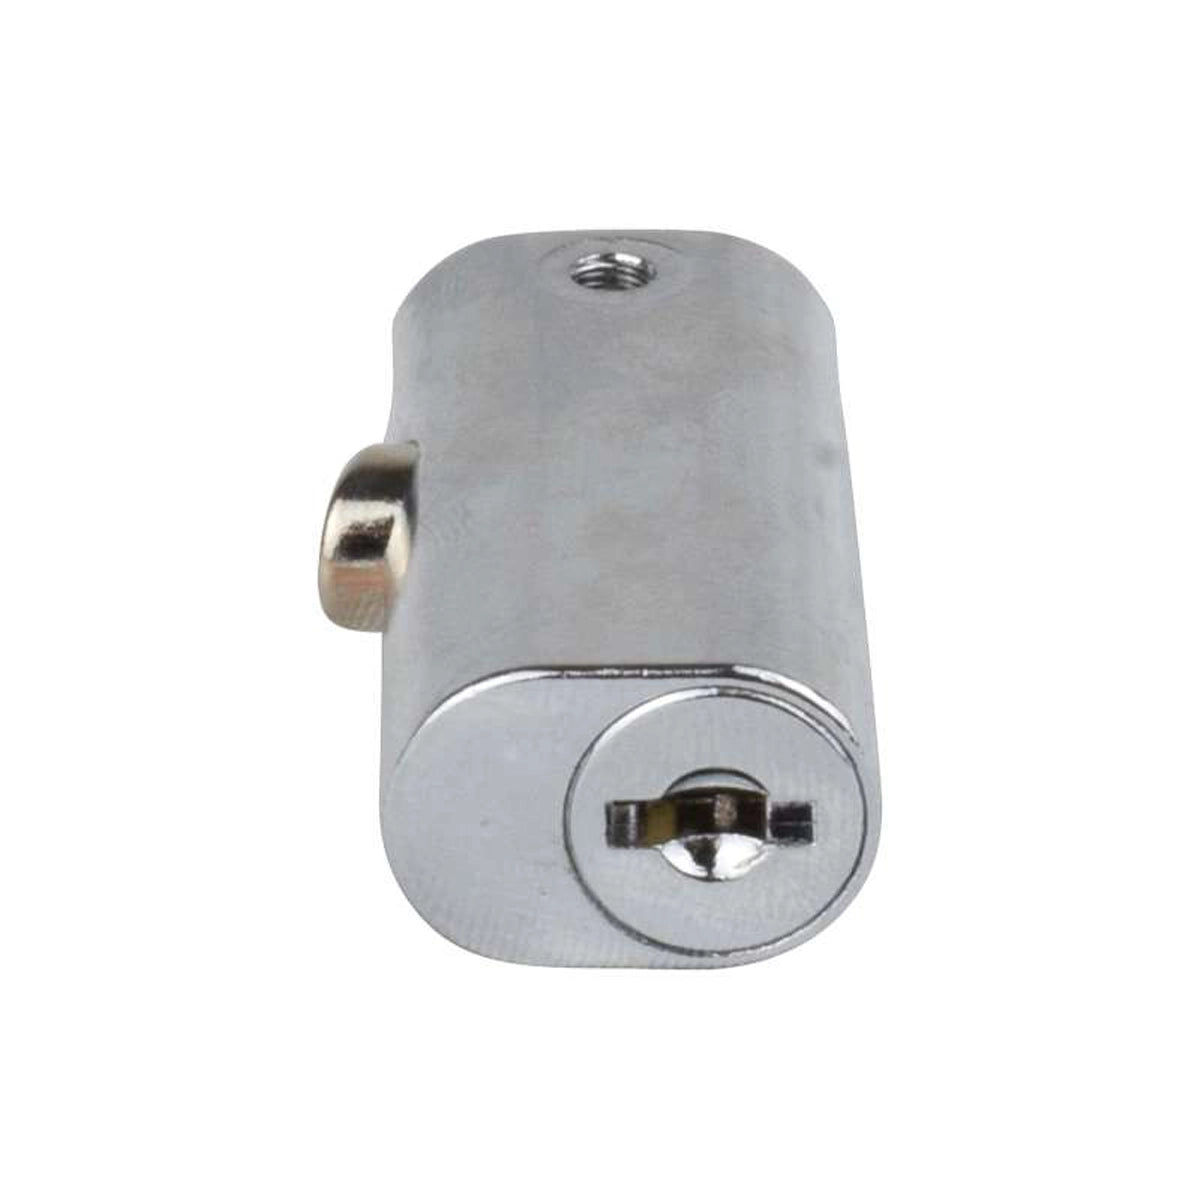 SAS Oval Barrel Lock w/ 2 Keys for HD1, Trailer Clamp, Supaclamp